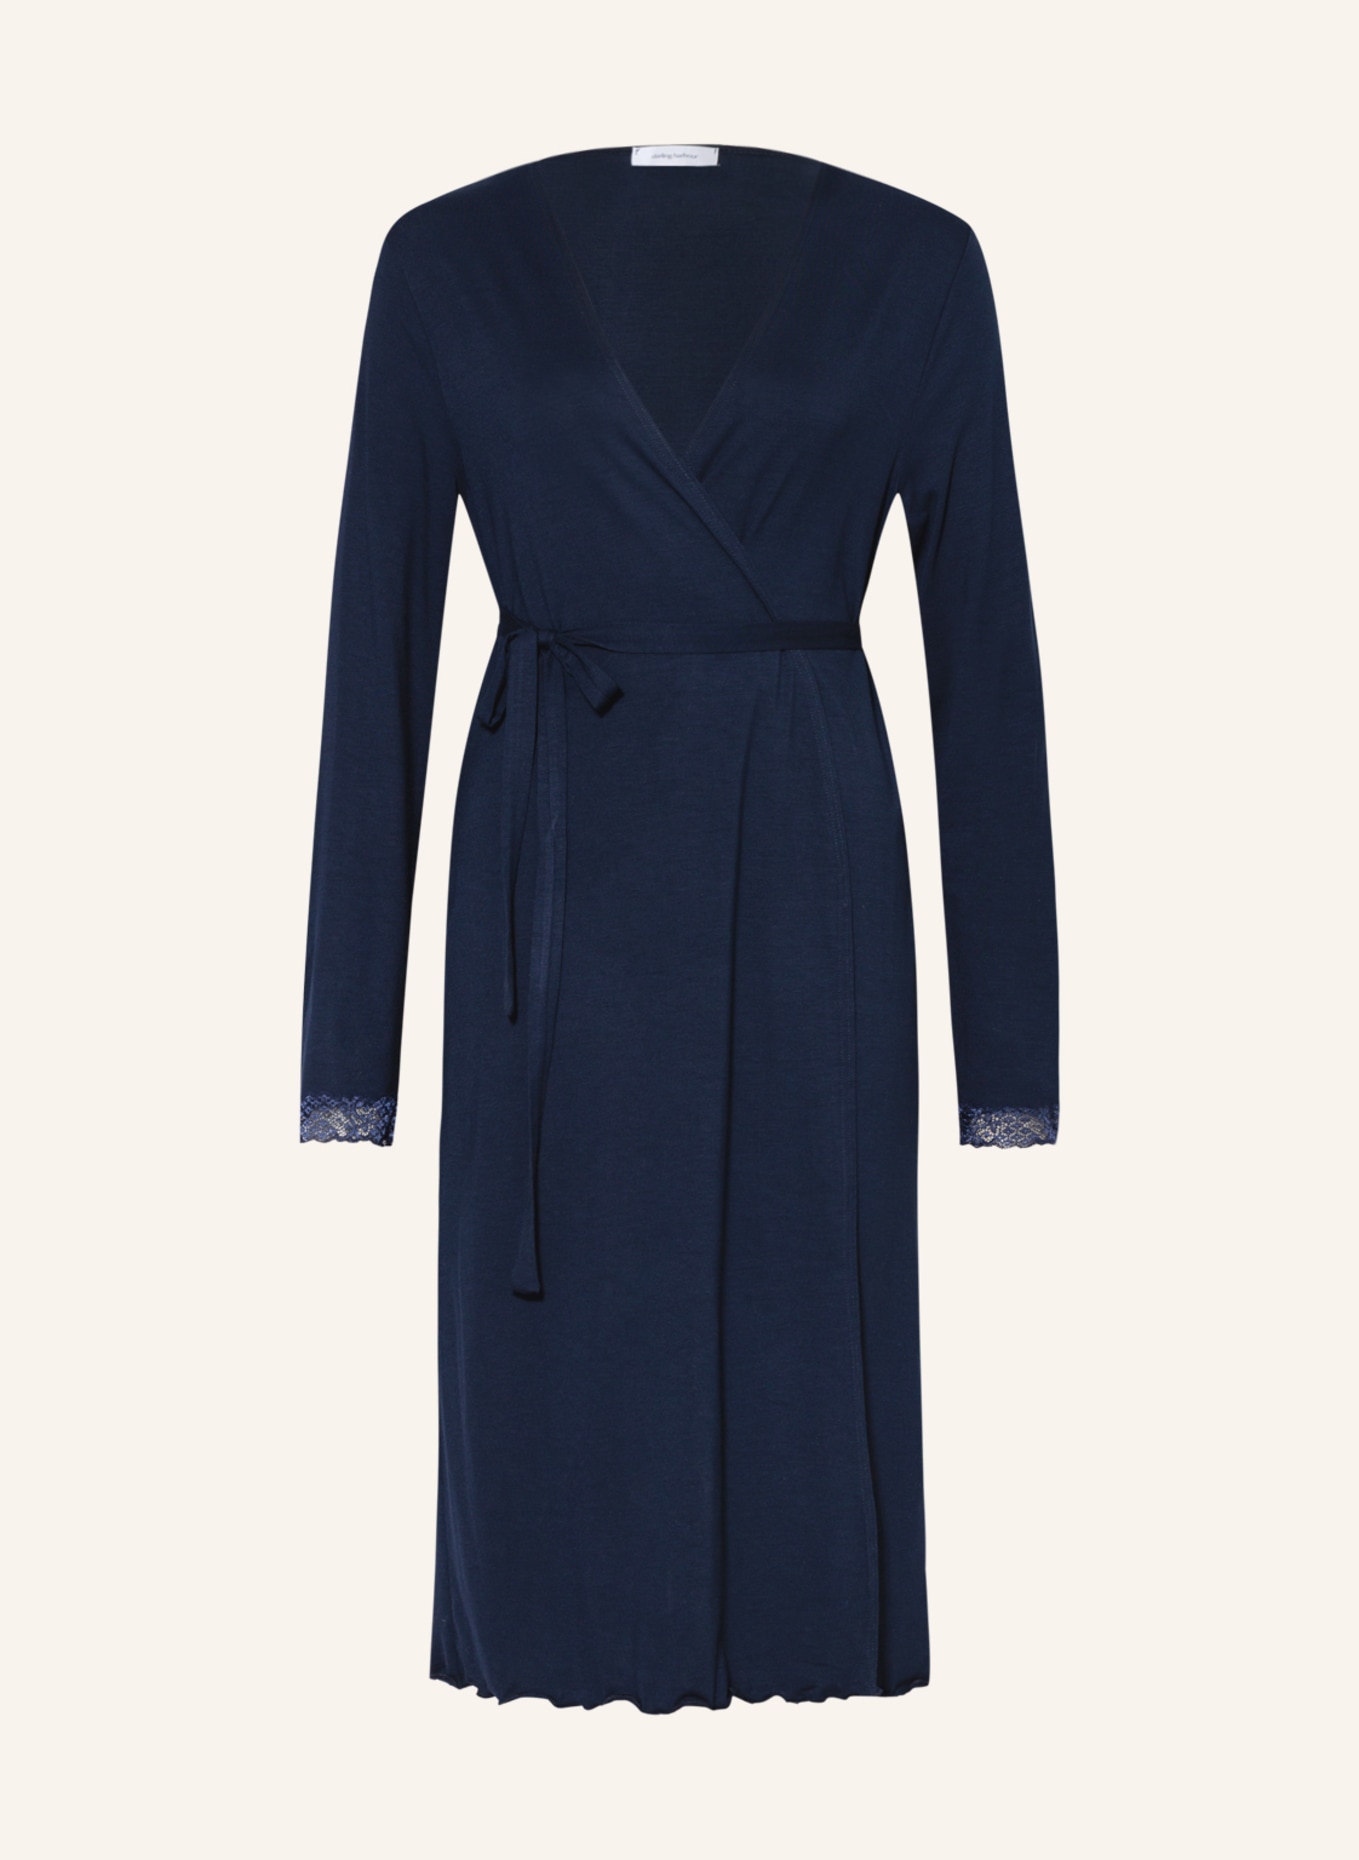 Mens Navy Velvet Robe | Quilted Vintage Dressing Gown Warm